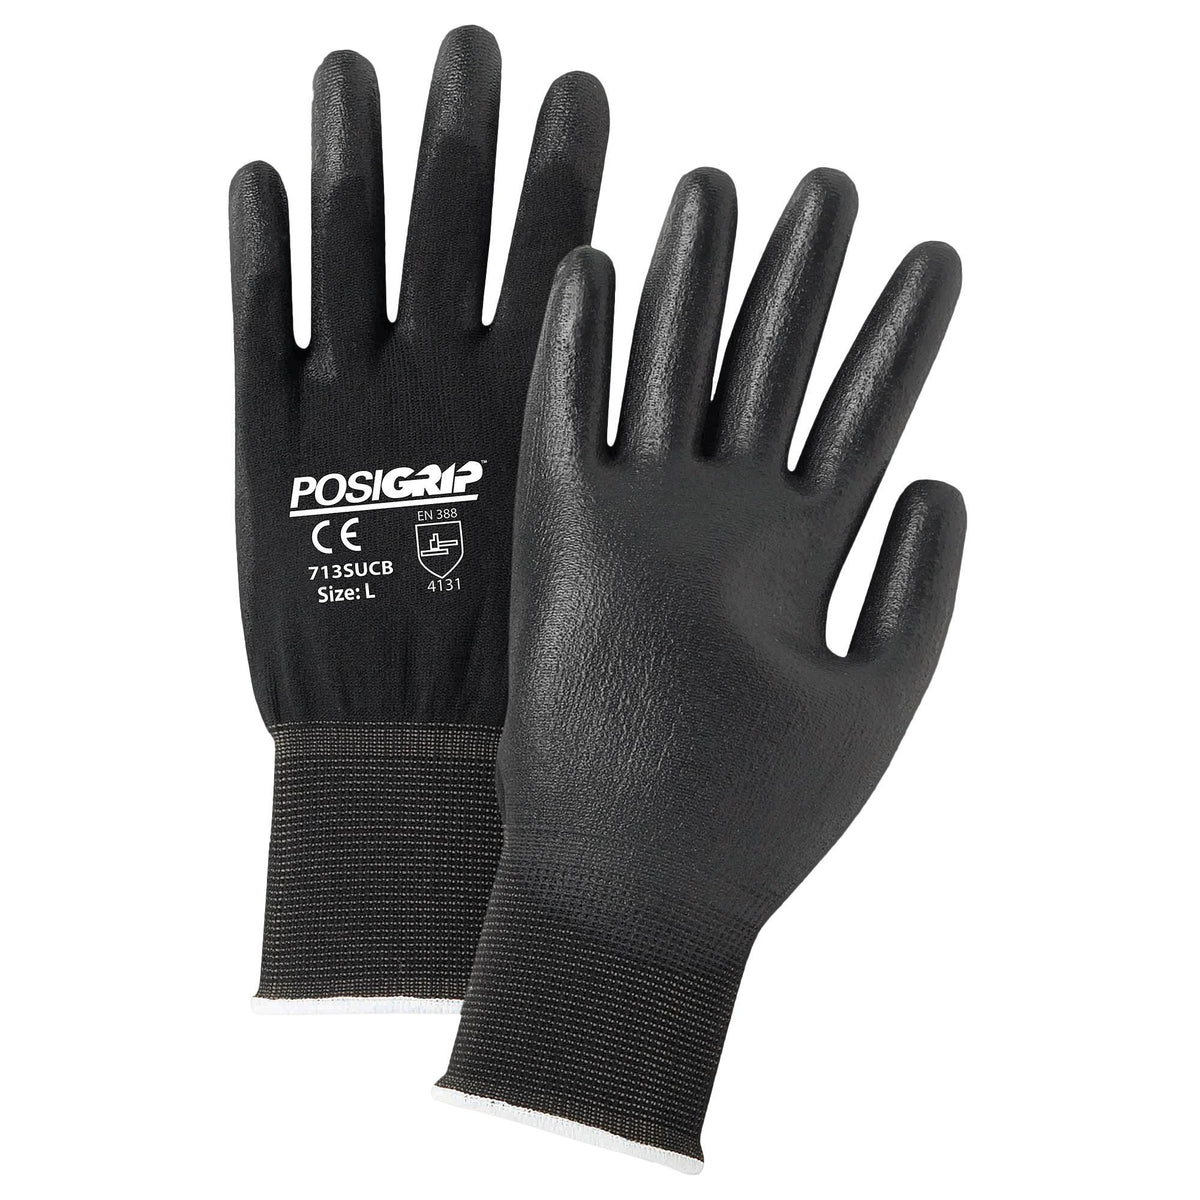 Polyurethane Gloves with Posi-Grip Coating 1pair